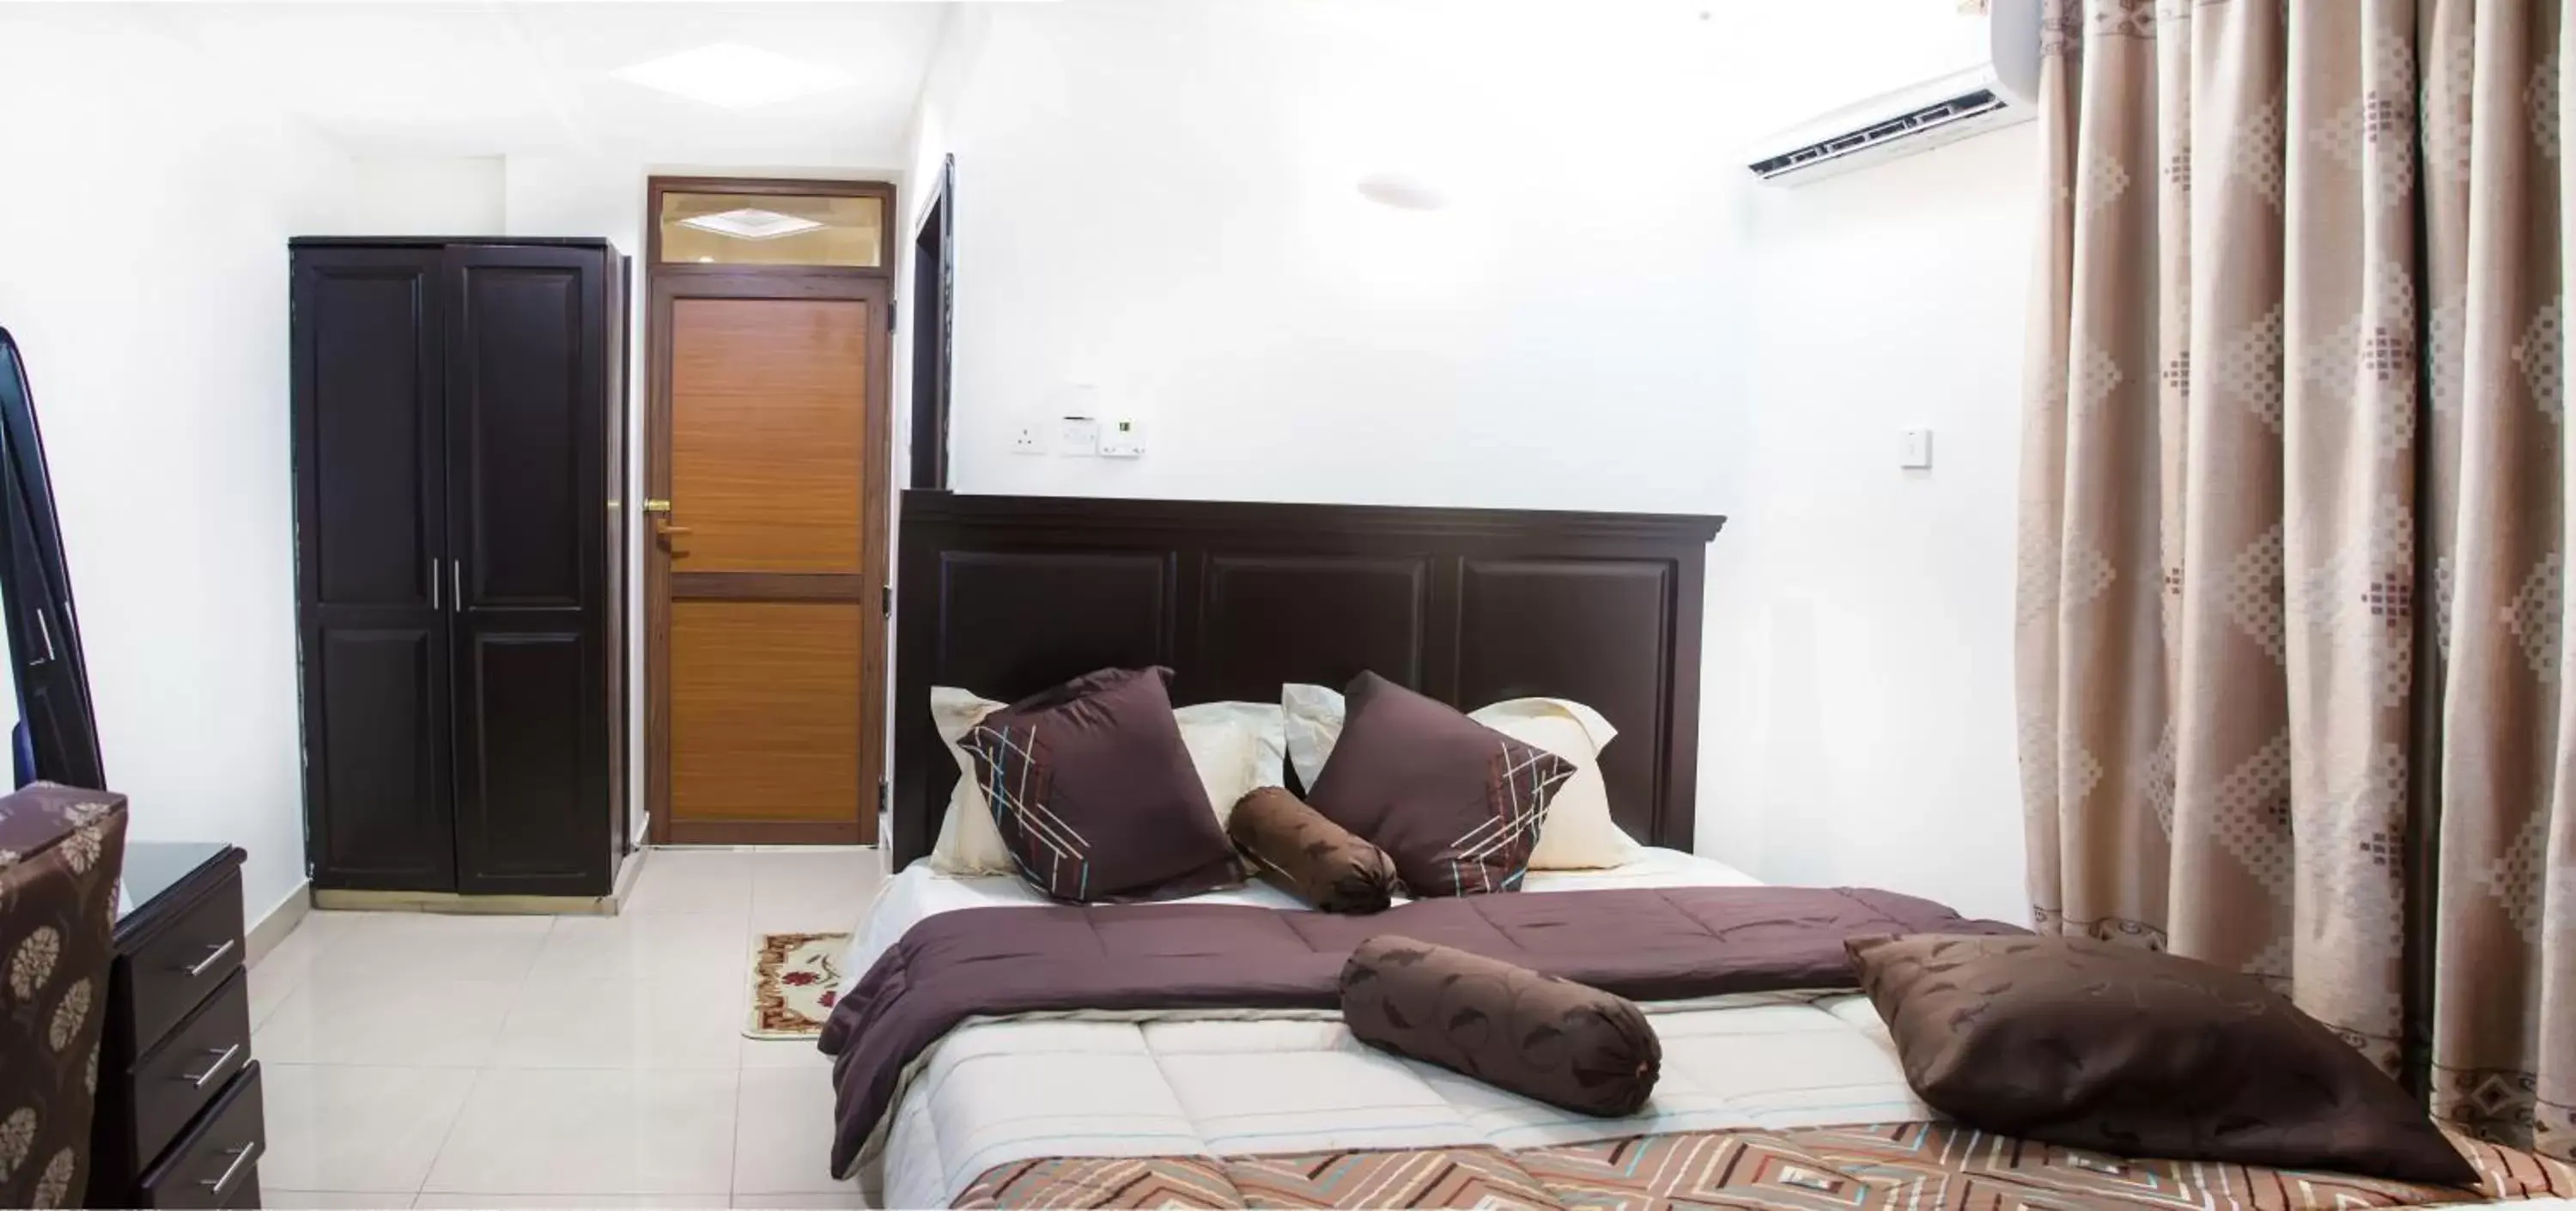 Bed, Seating Area in Sleep Inn Hotel - Kariakoo